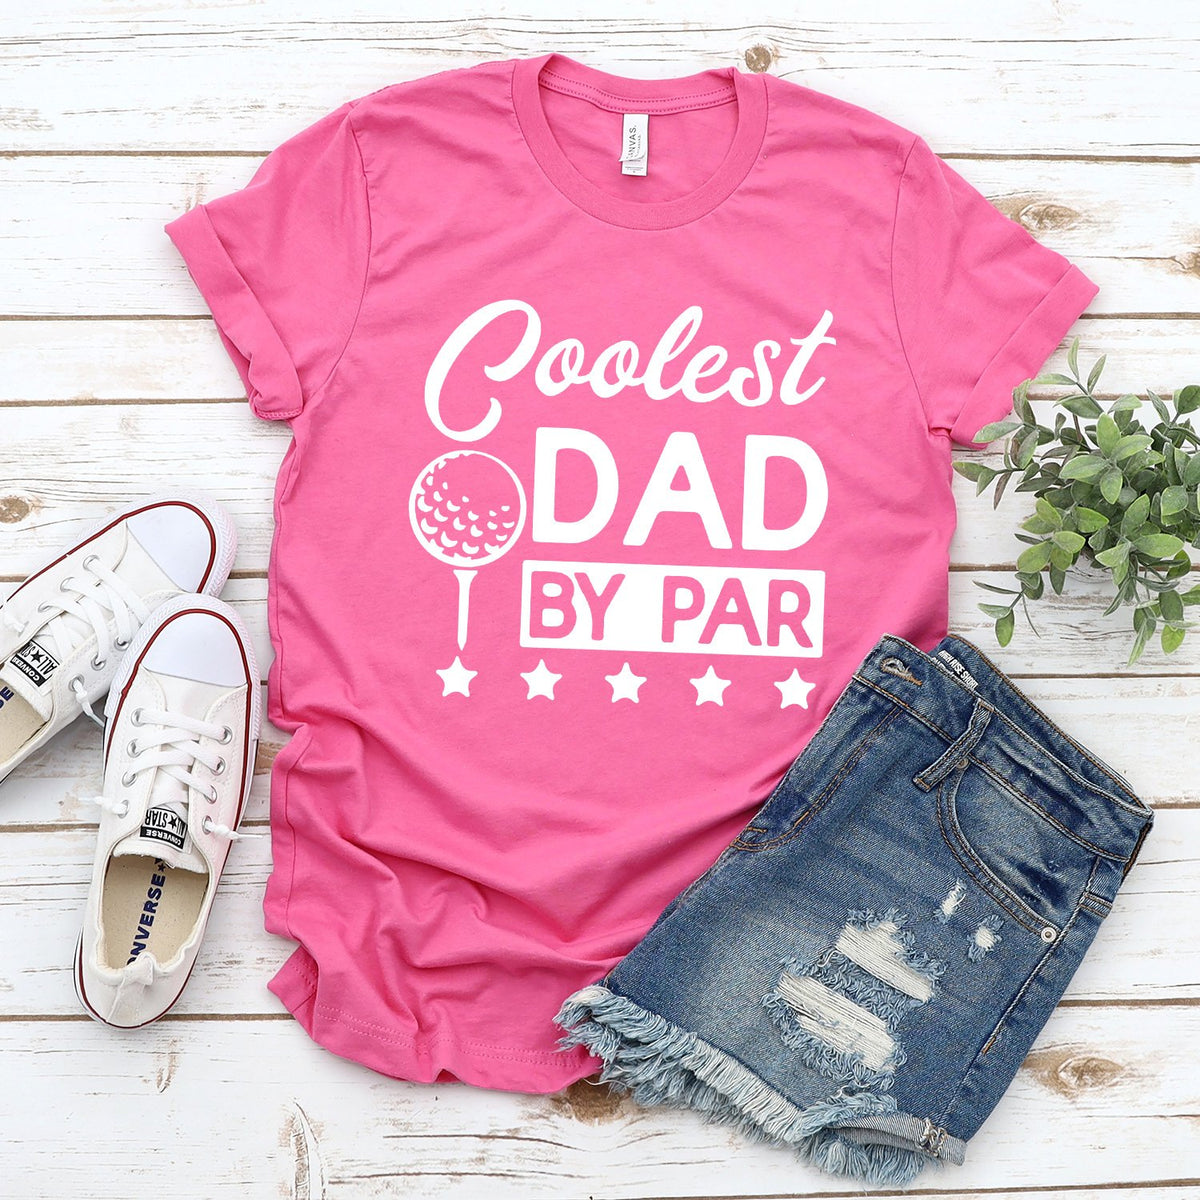 Coolest Dad By Par - Short Sleeve Tee Shirt